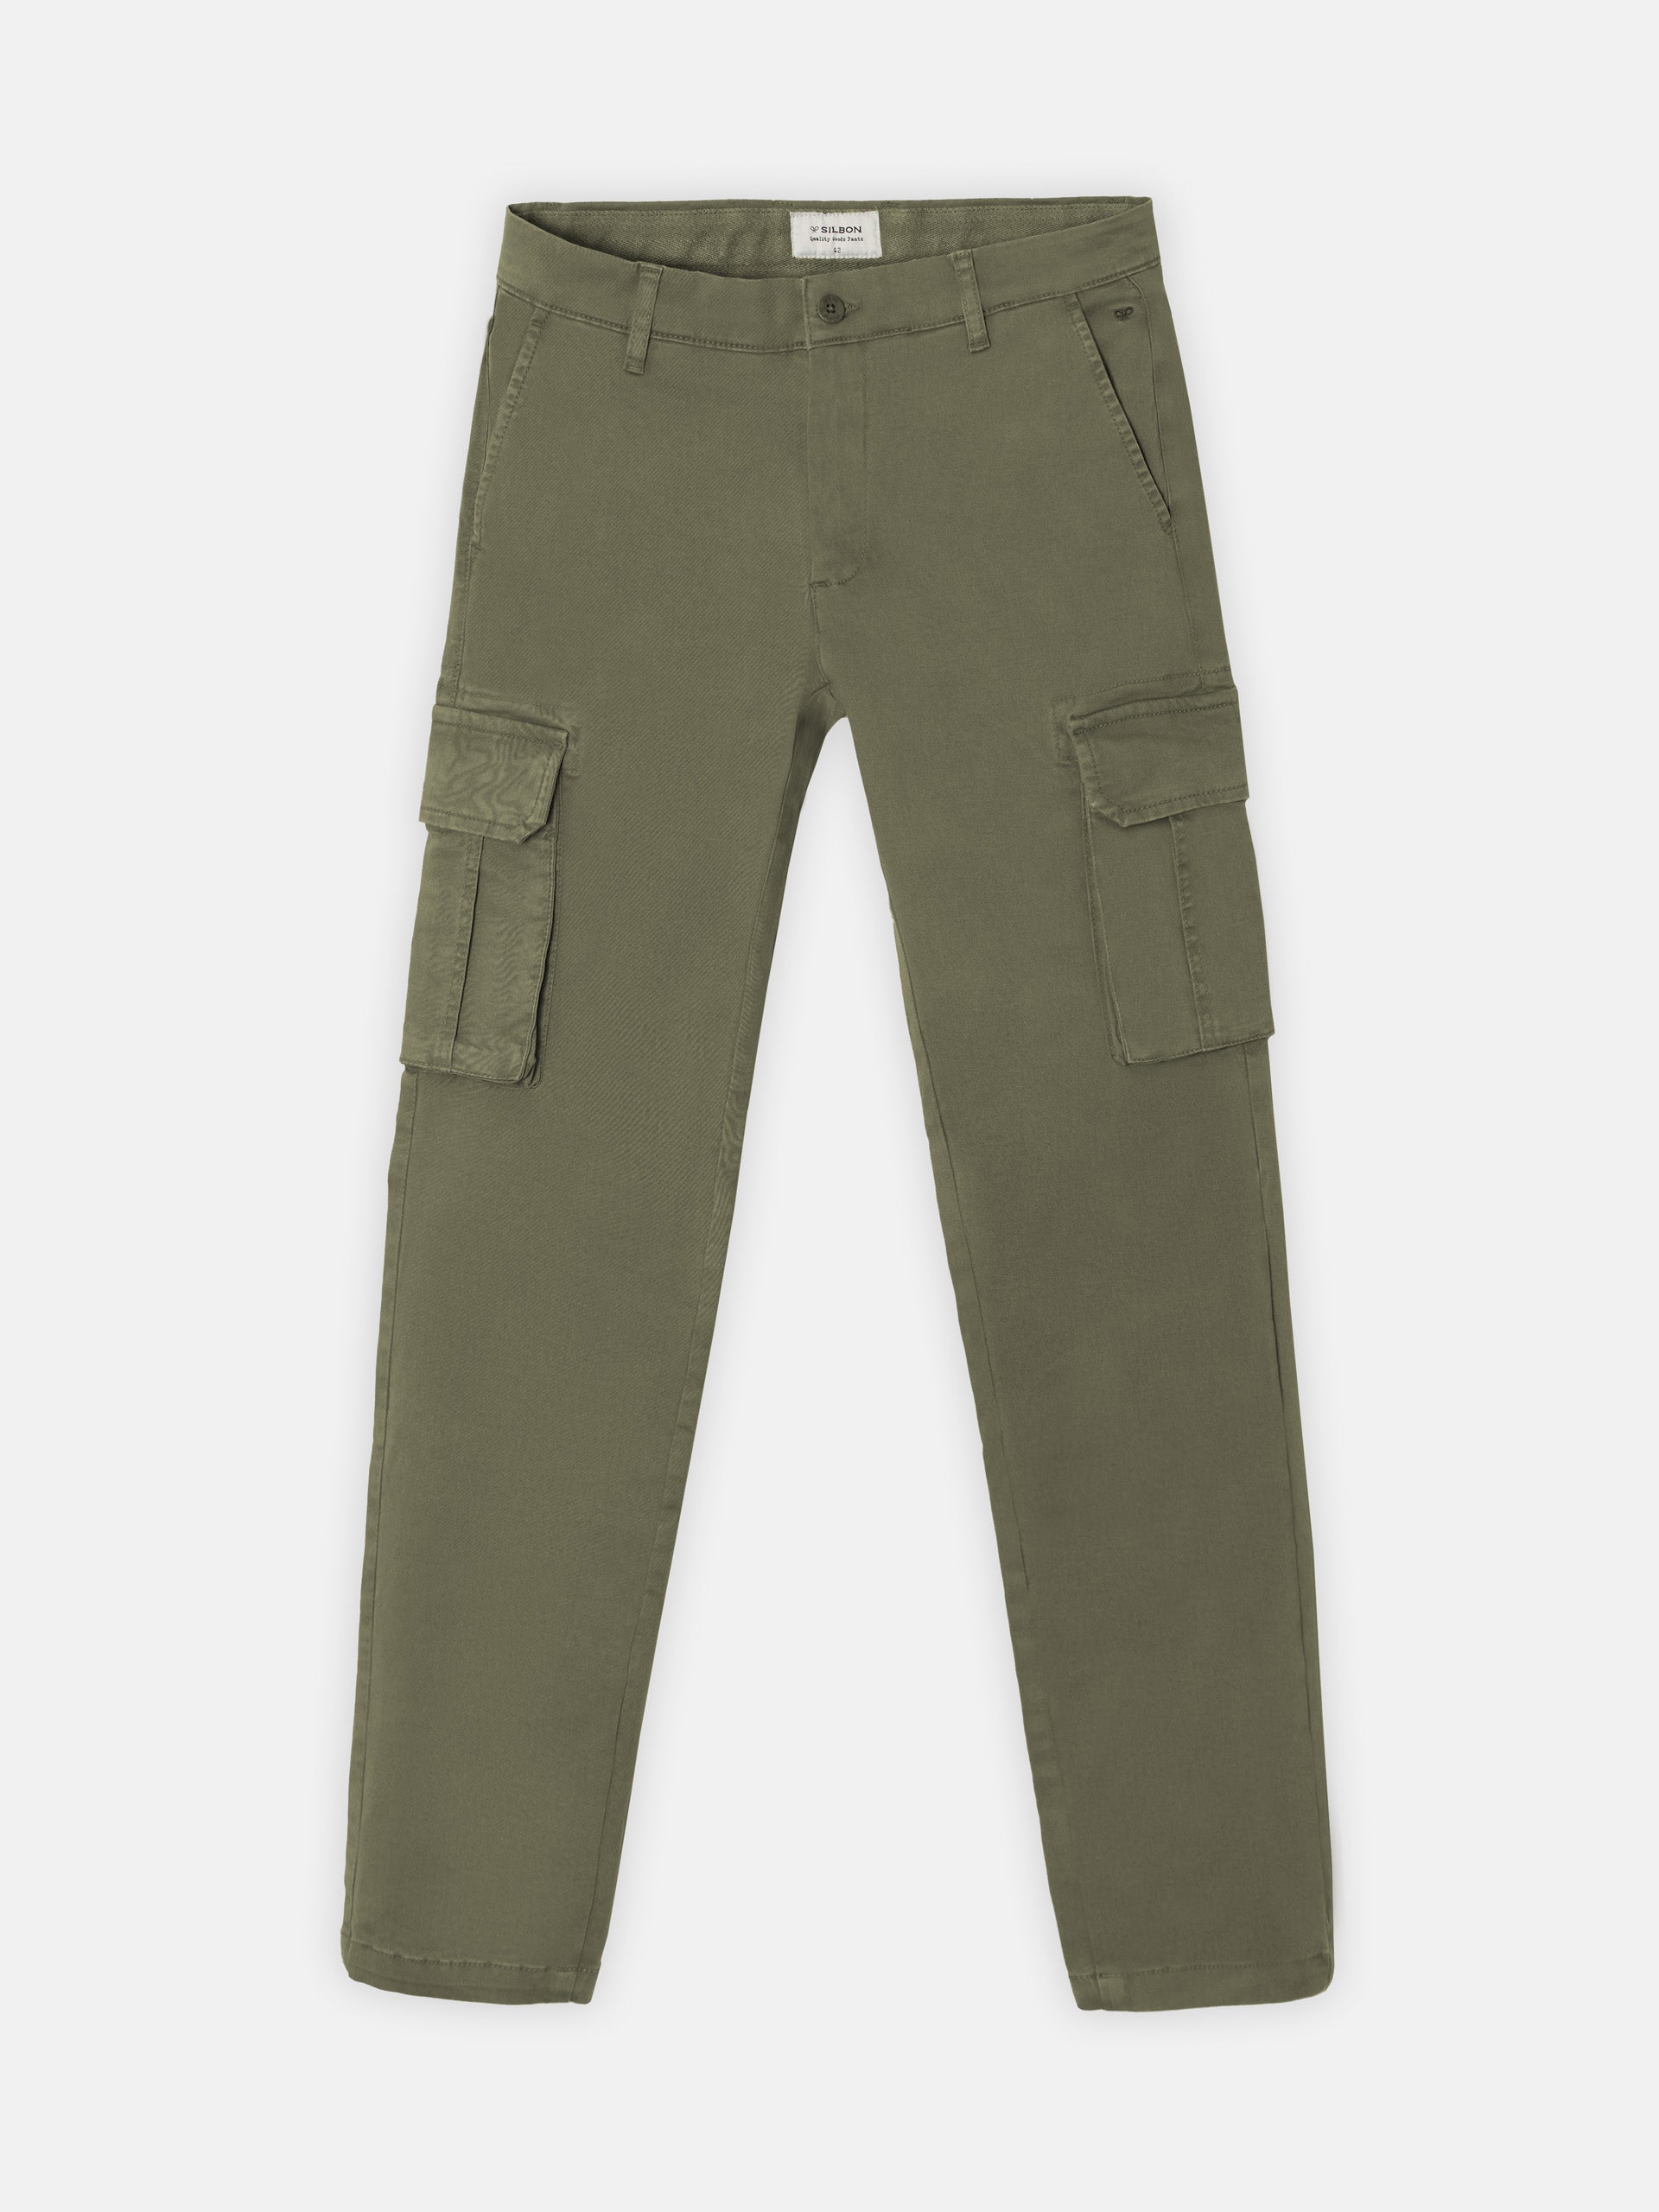 Green cargo sport pants